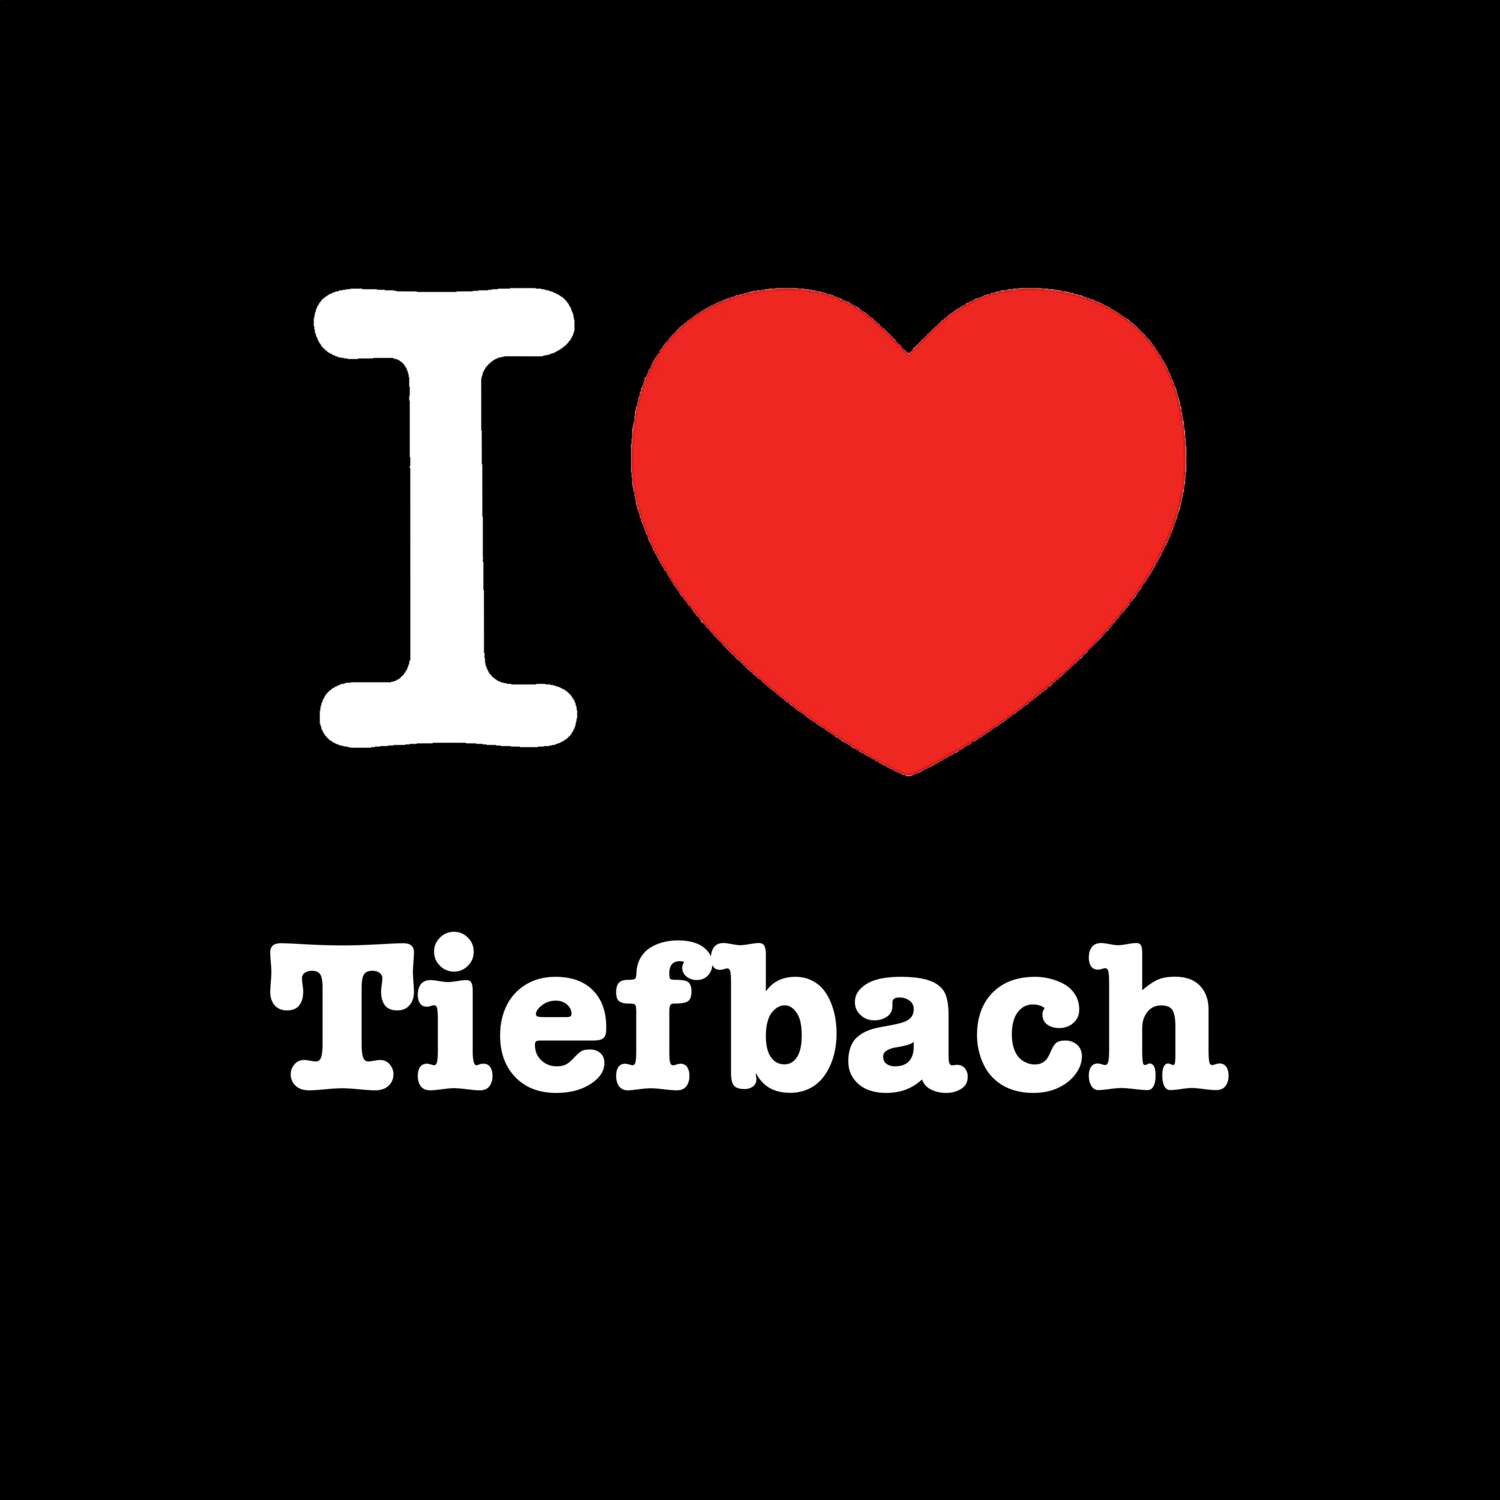 Tiefbach T-Shirt »I love«